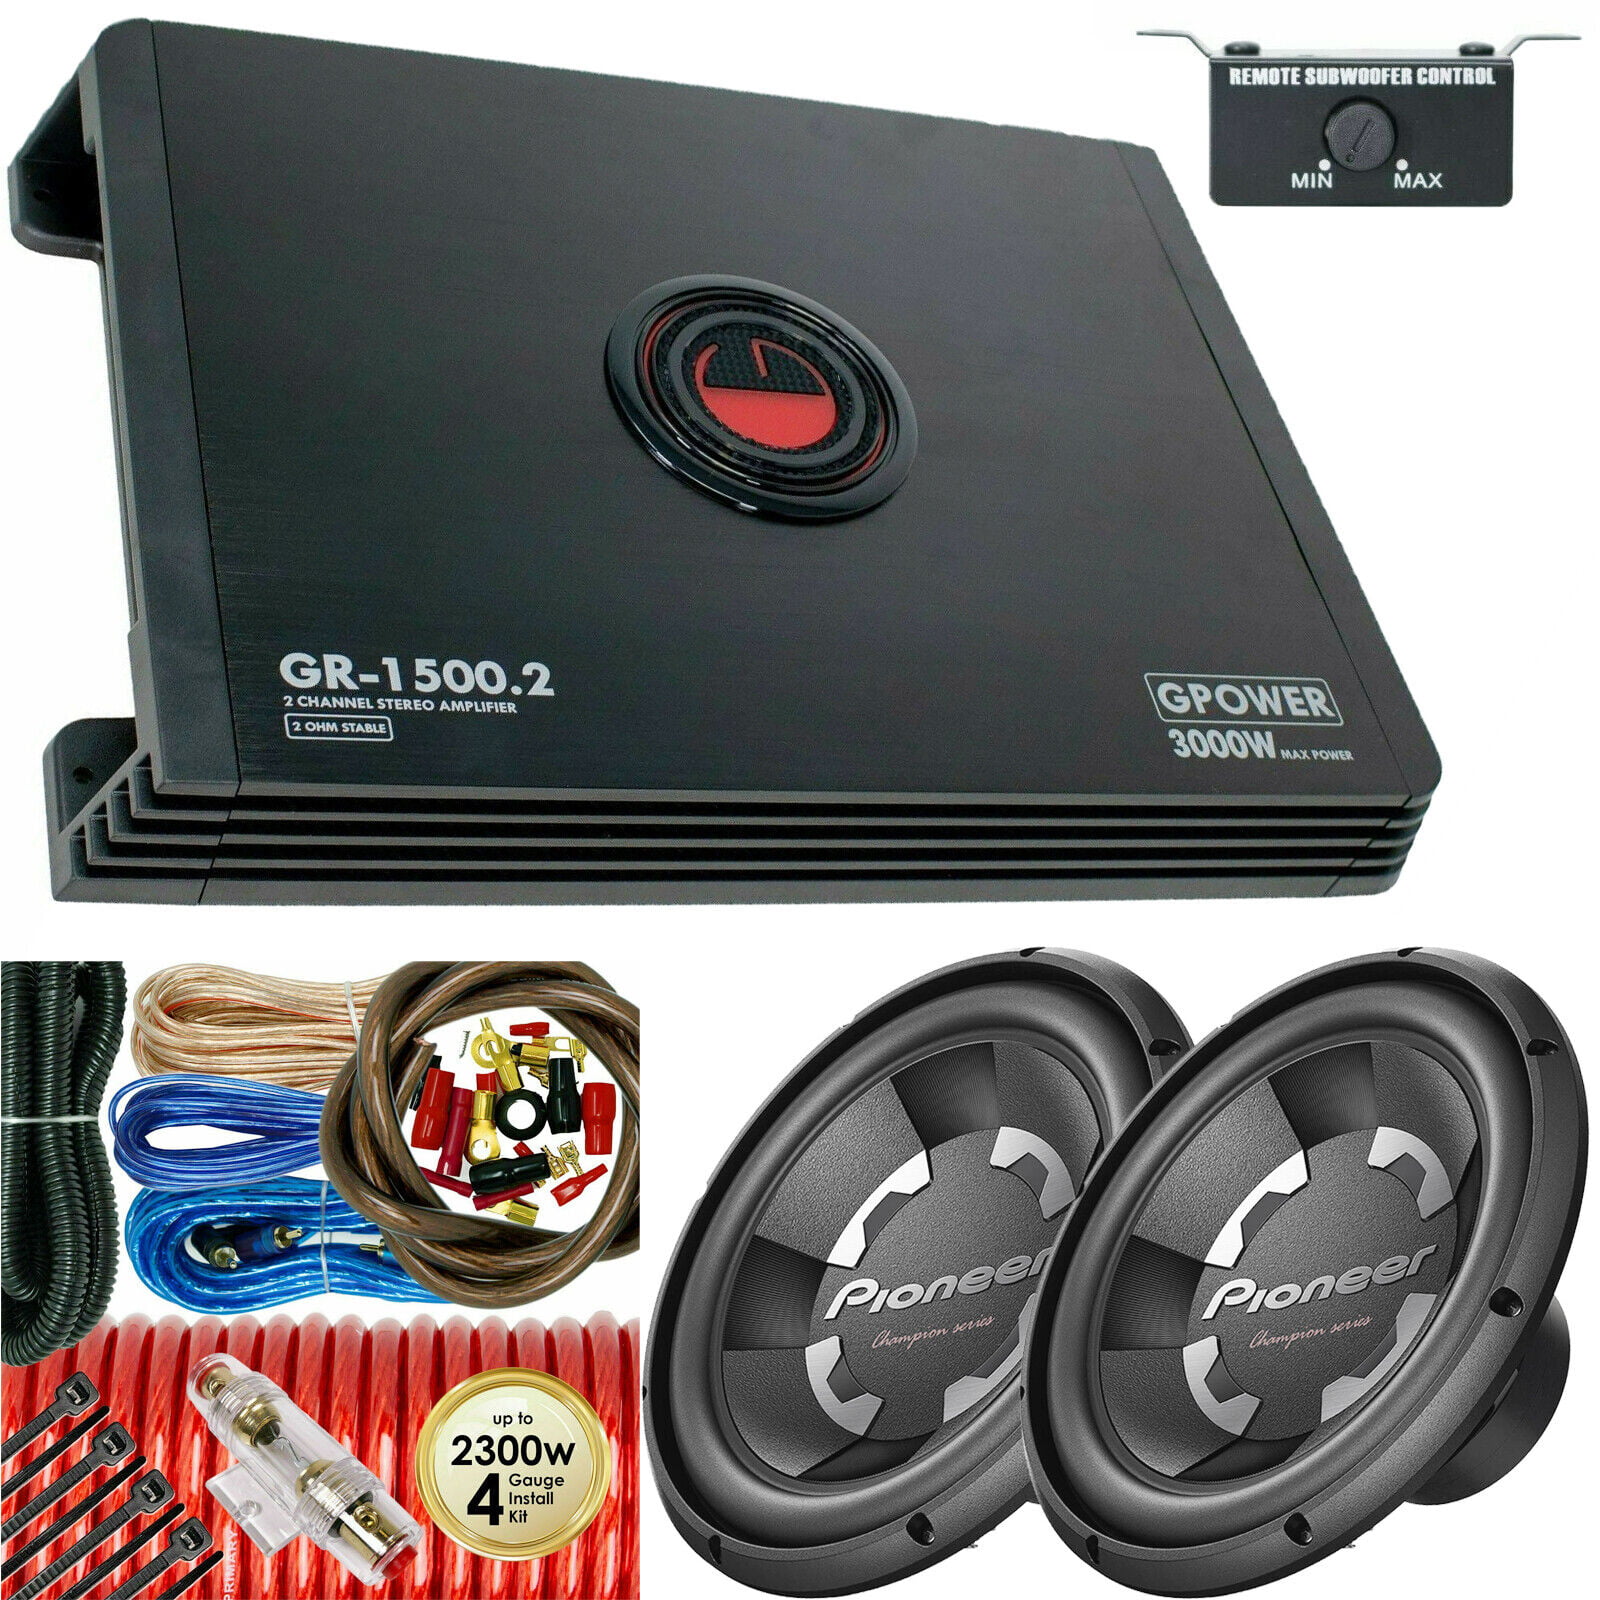 1x Pioneer TS-300D4 12" 1400 Watts + + Amplifier 3000W 2-Ch + 4 Ga Kit Bundle - Walmart.com